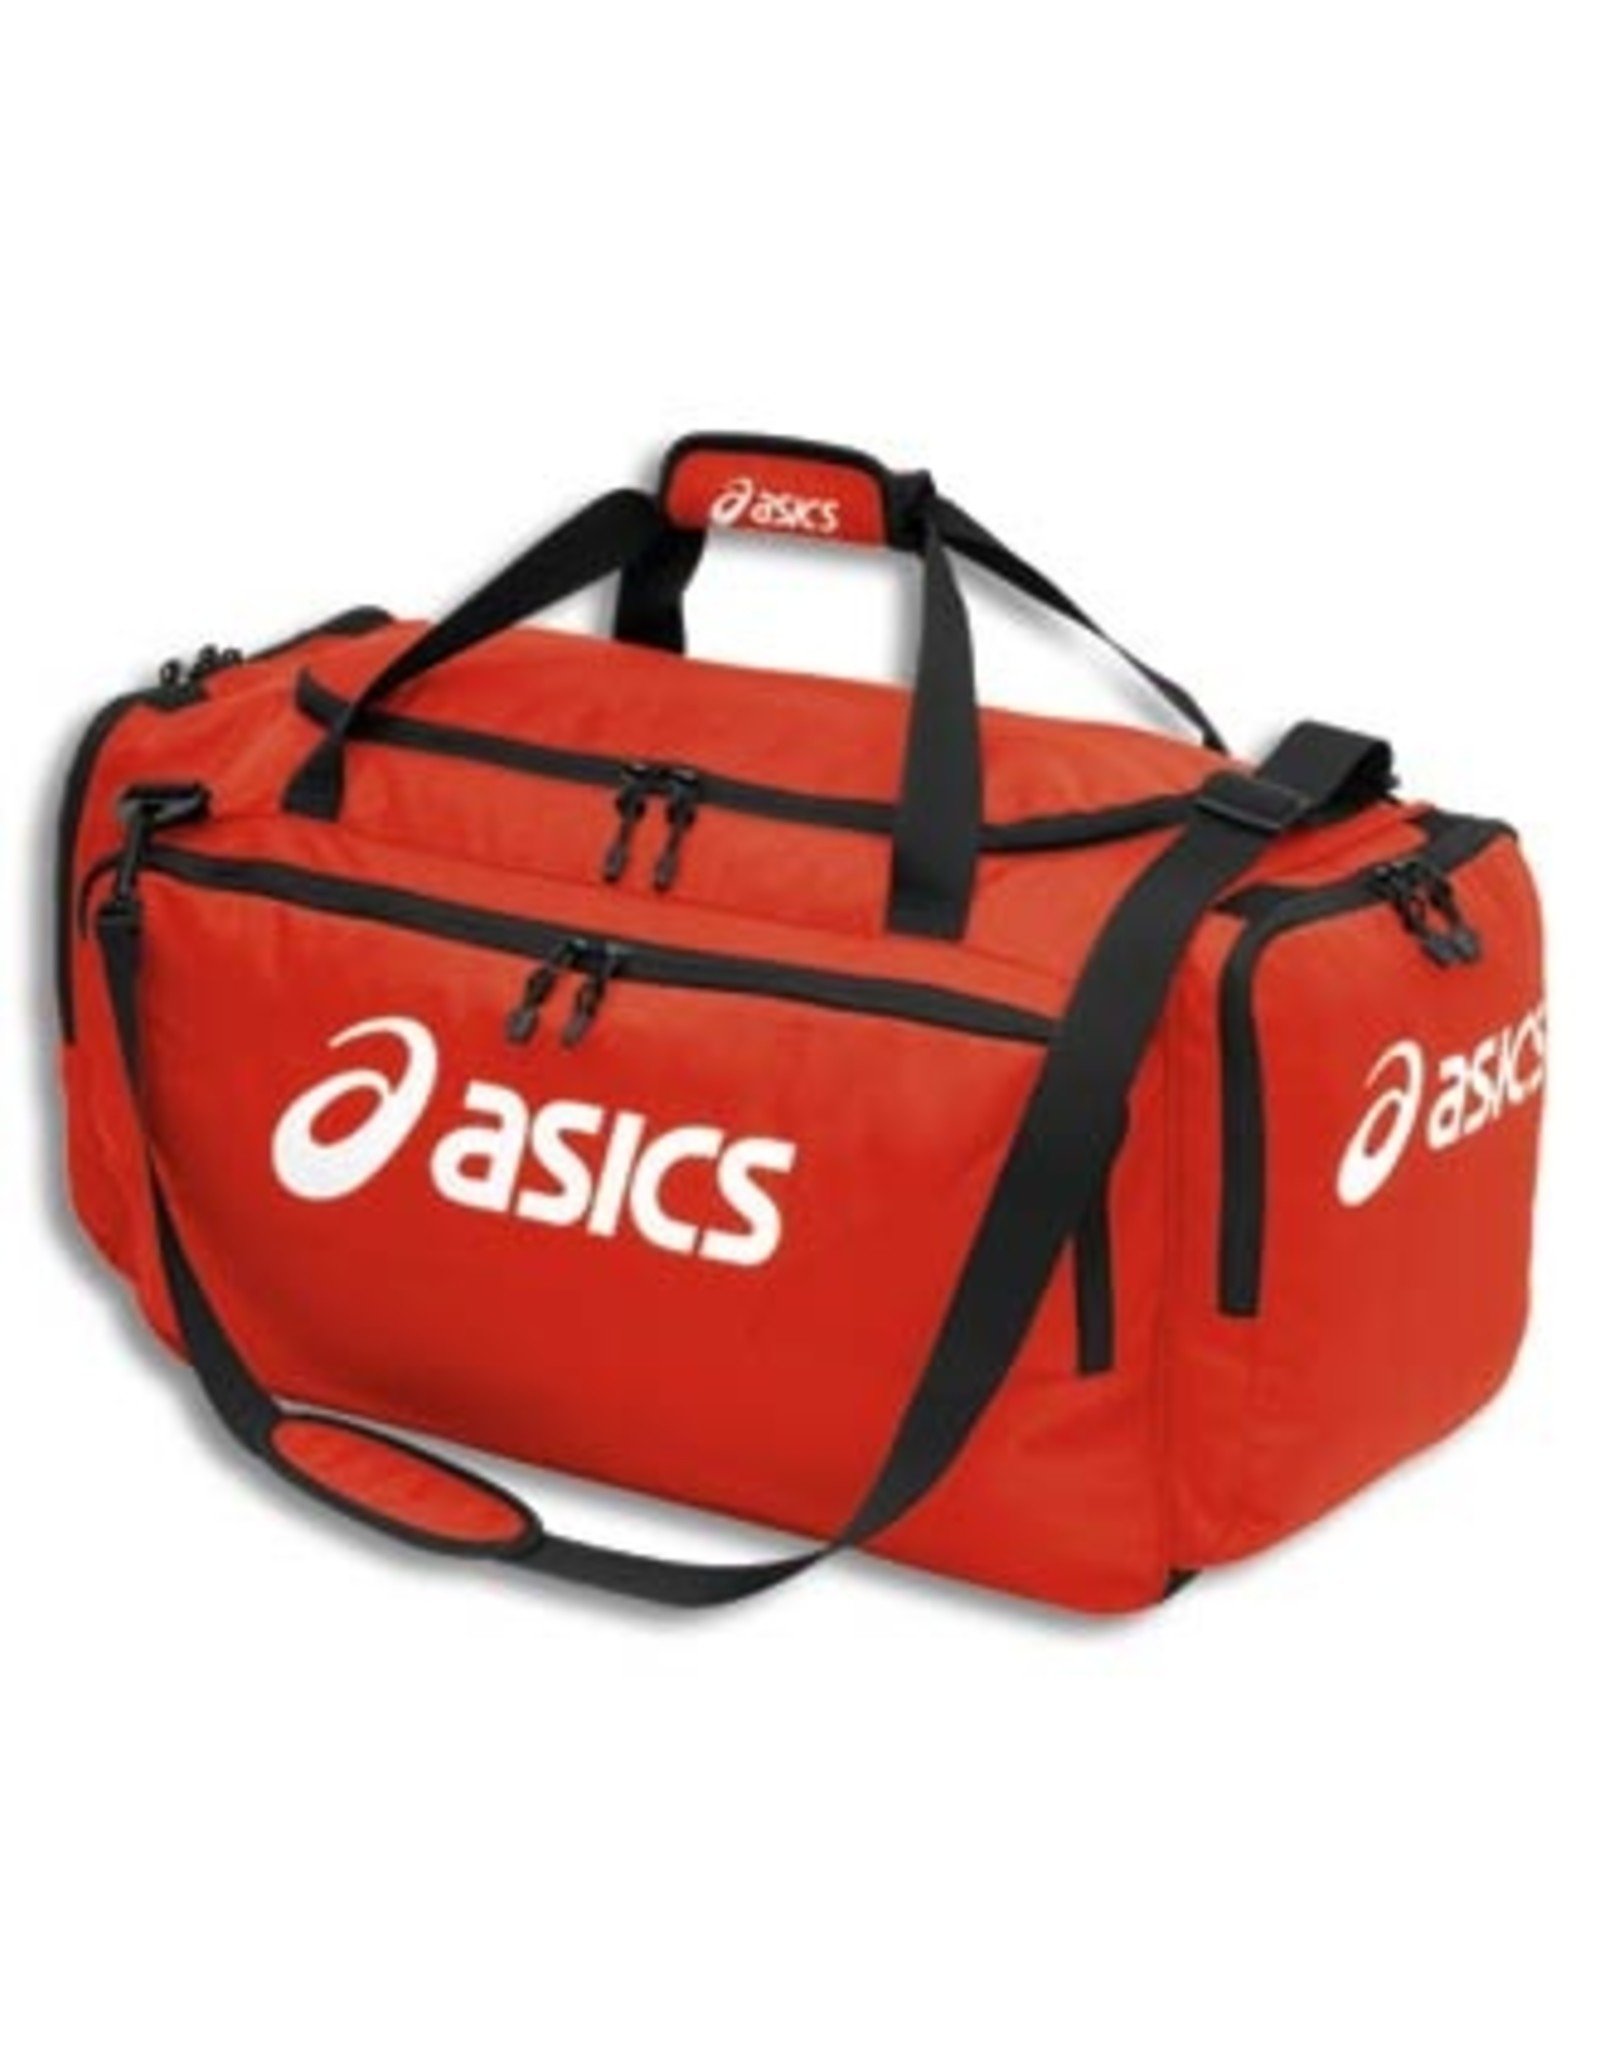 asics volleyball ball bags